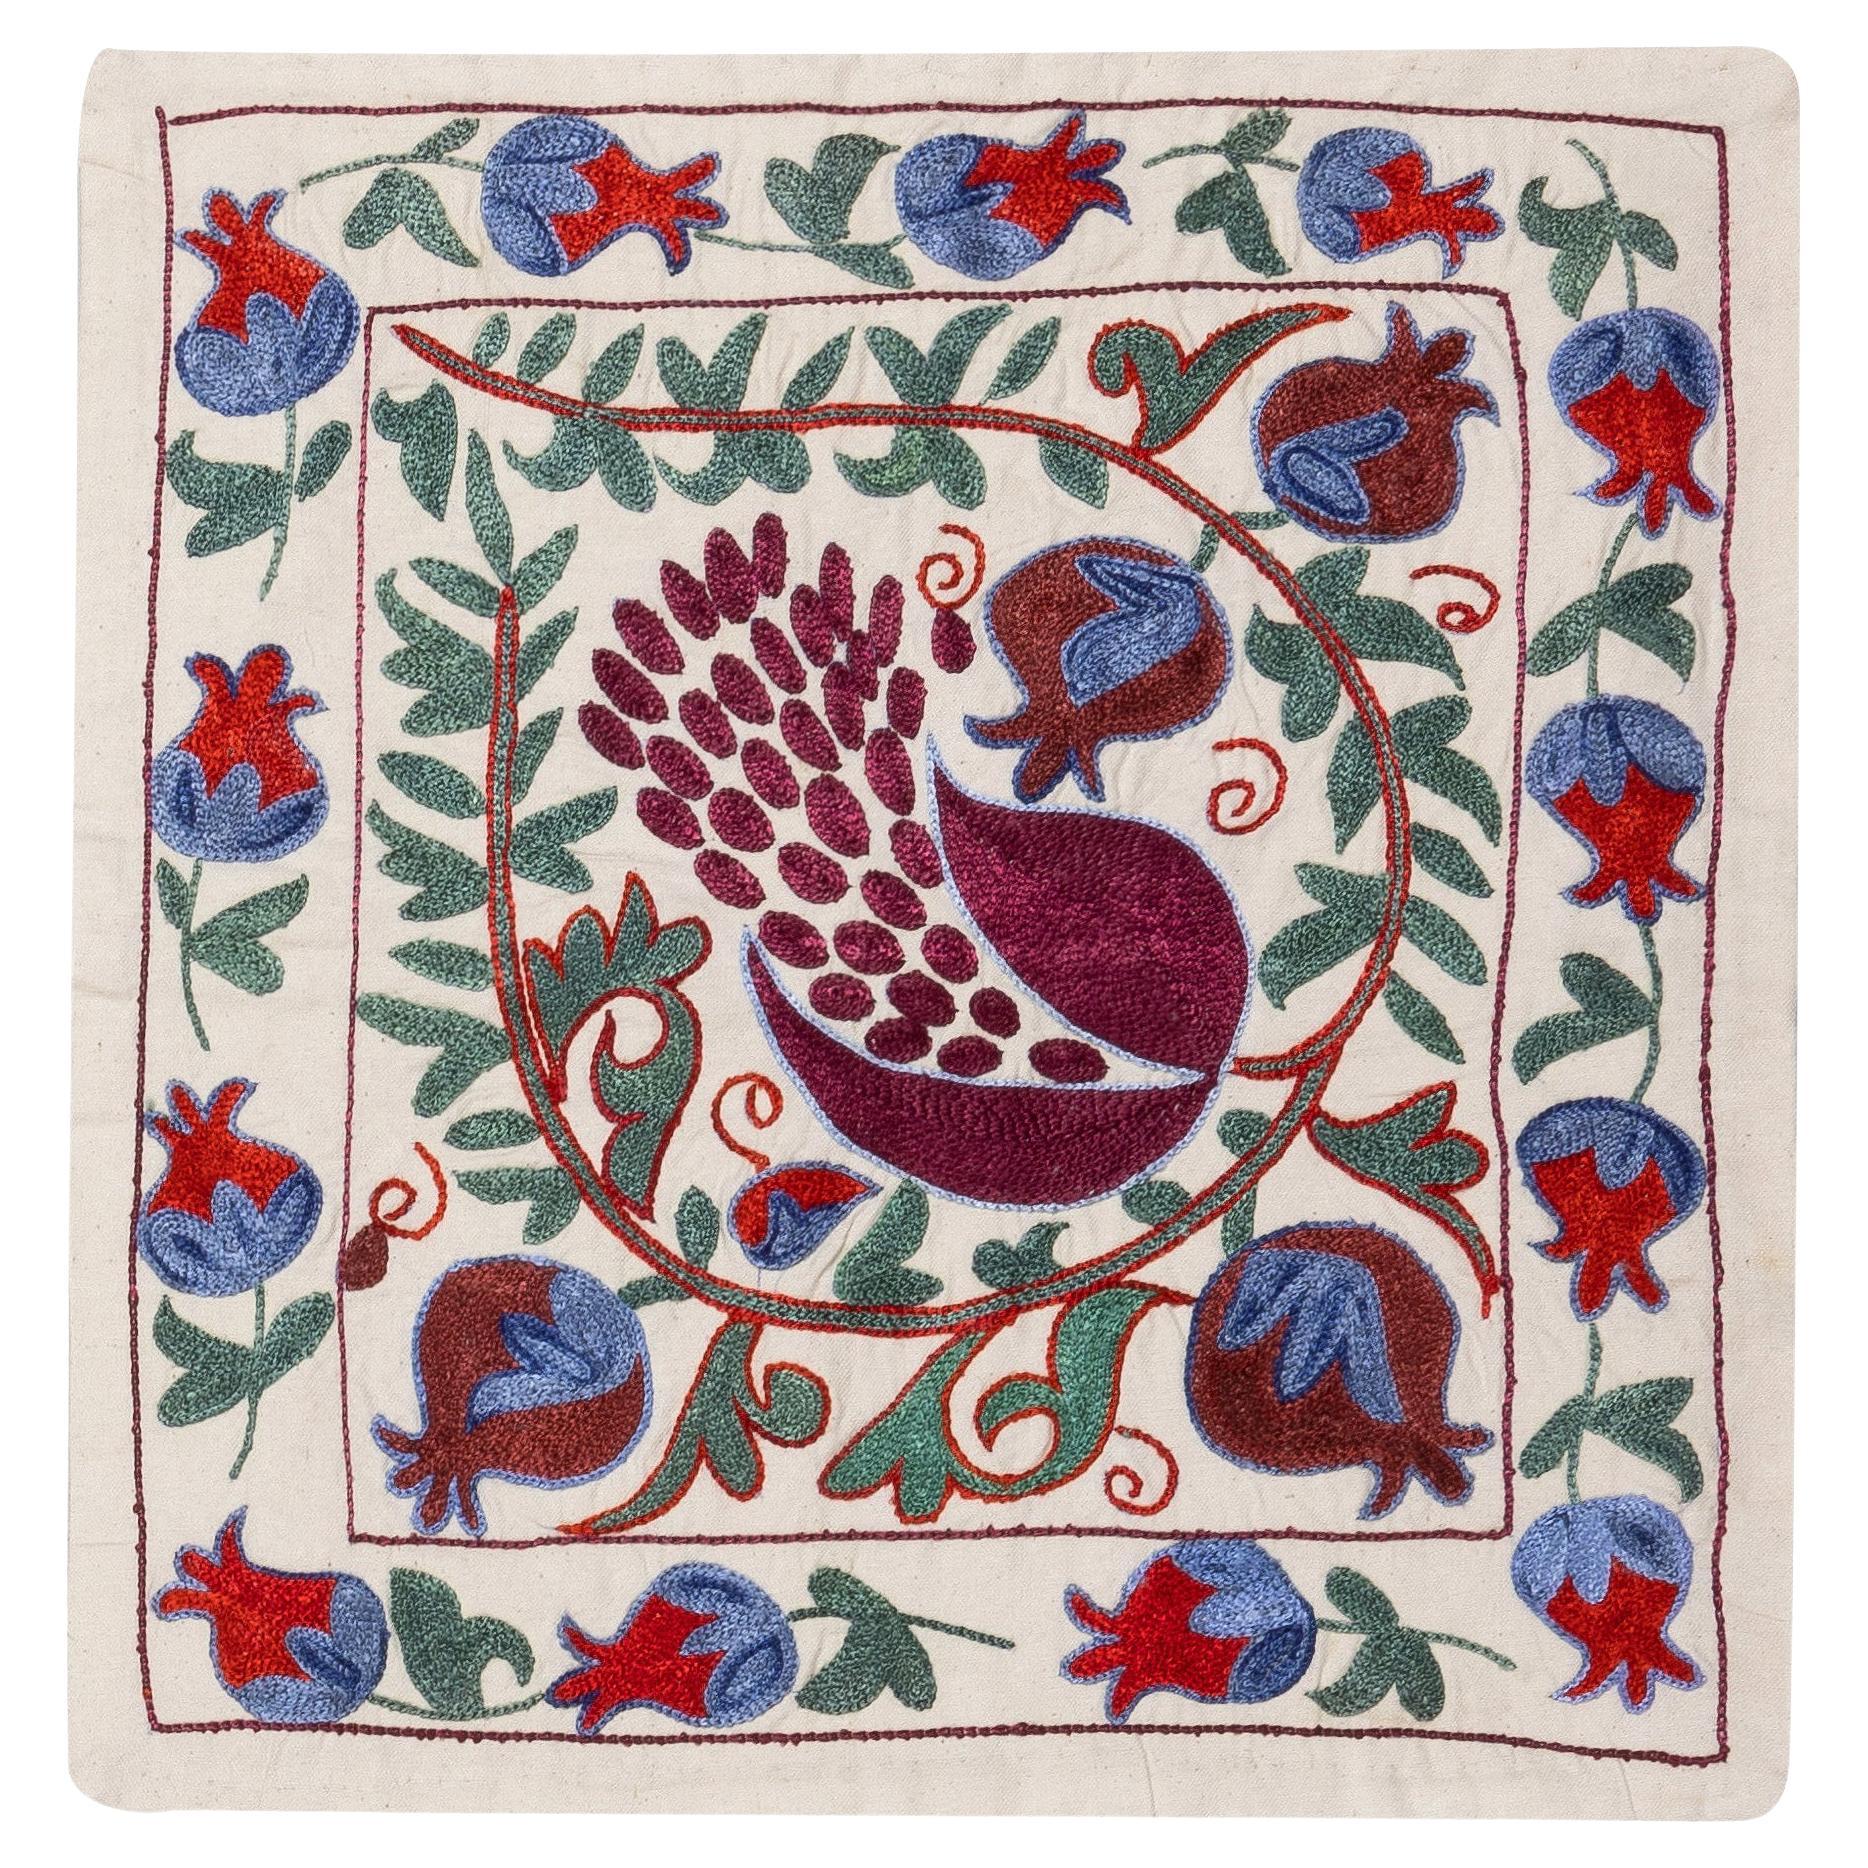 19"x19" Traditional Silk Embroidery Suzani Cushion, Handmade New Lace Pillow